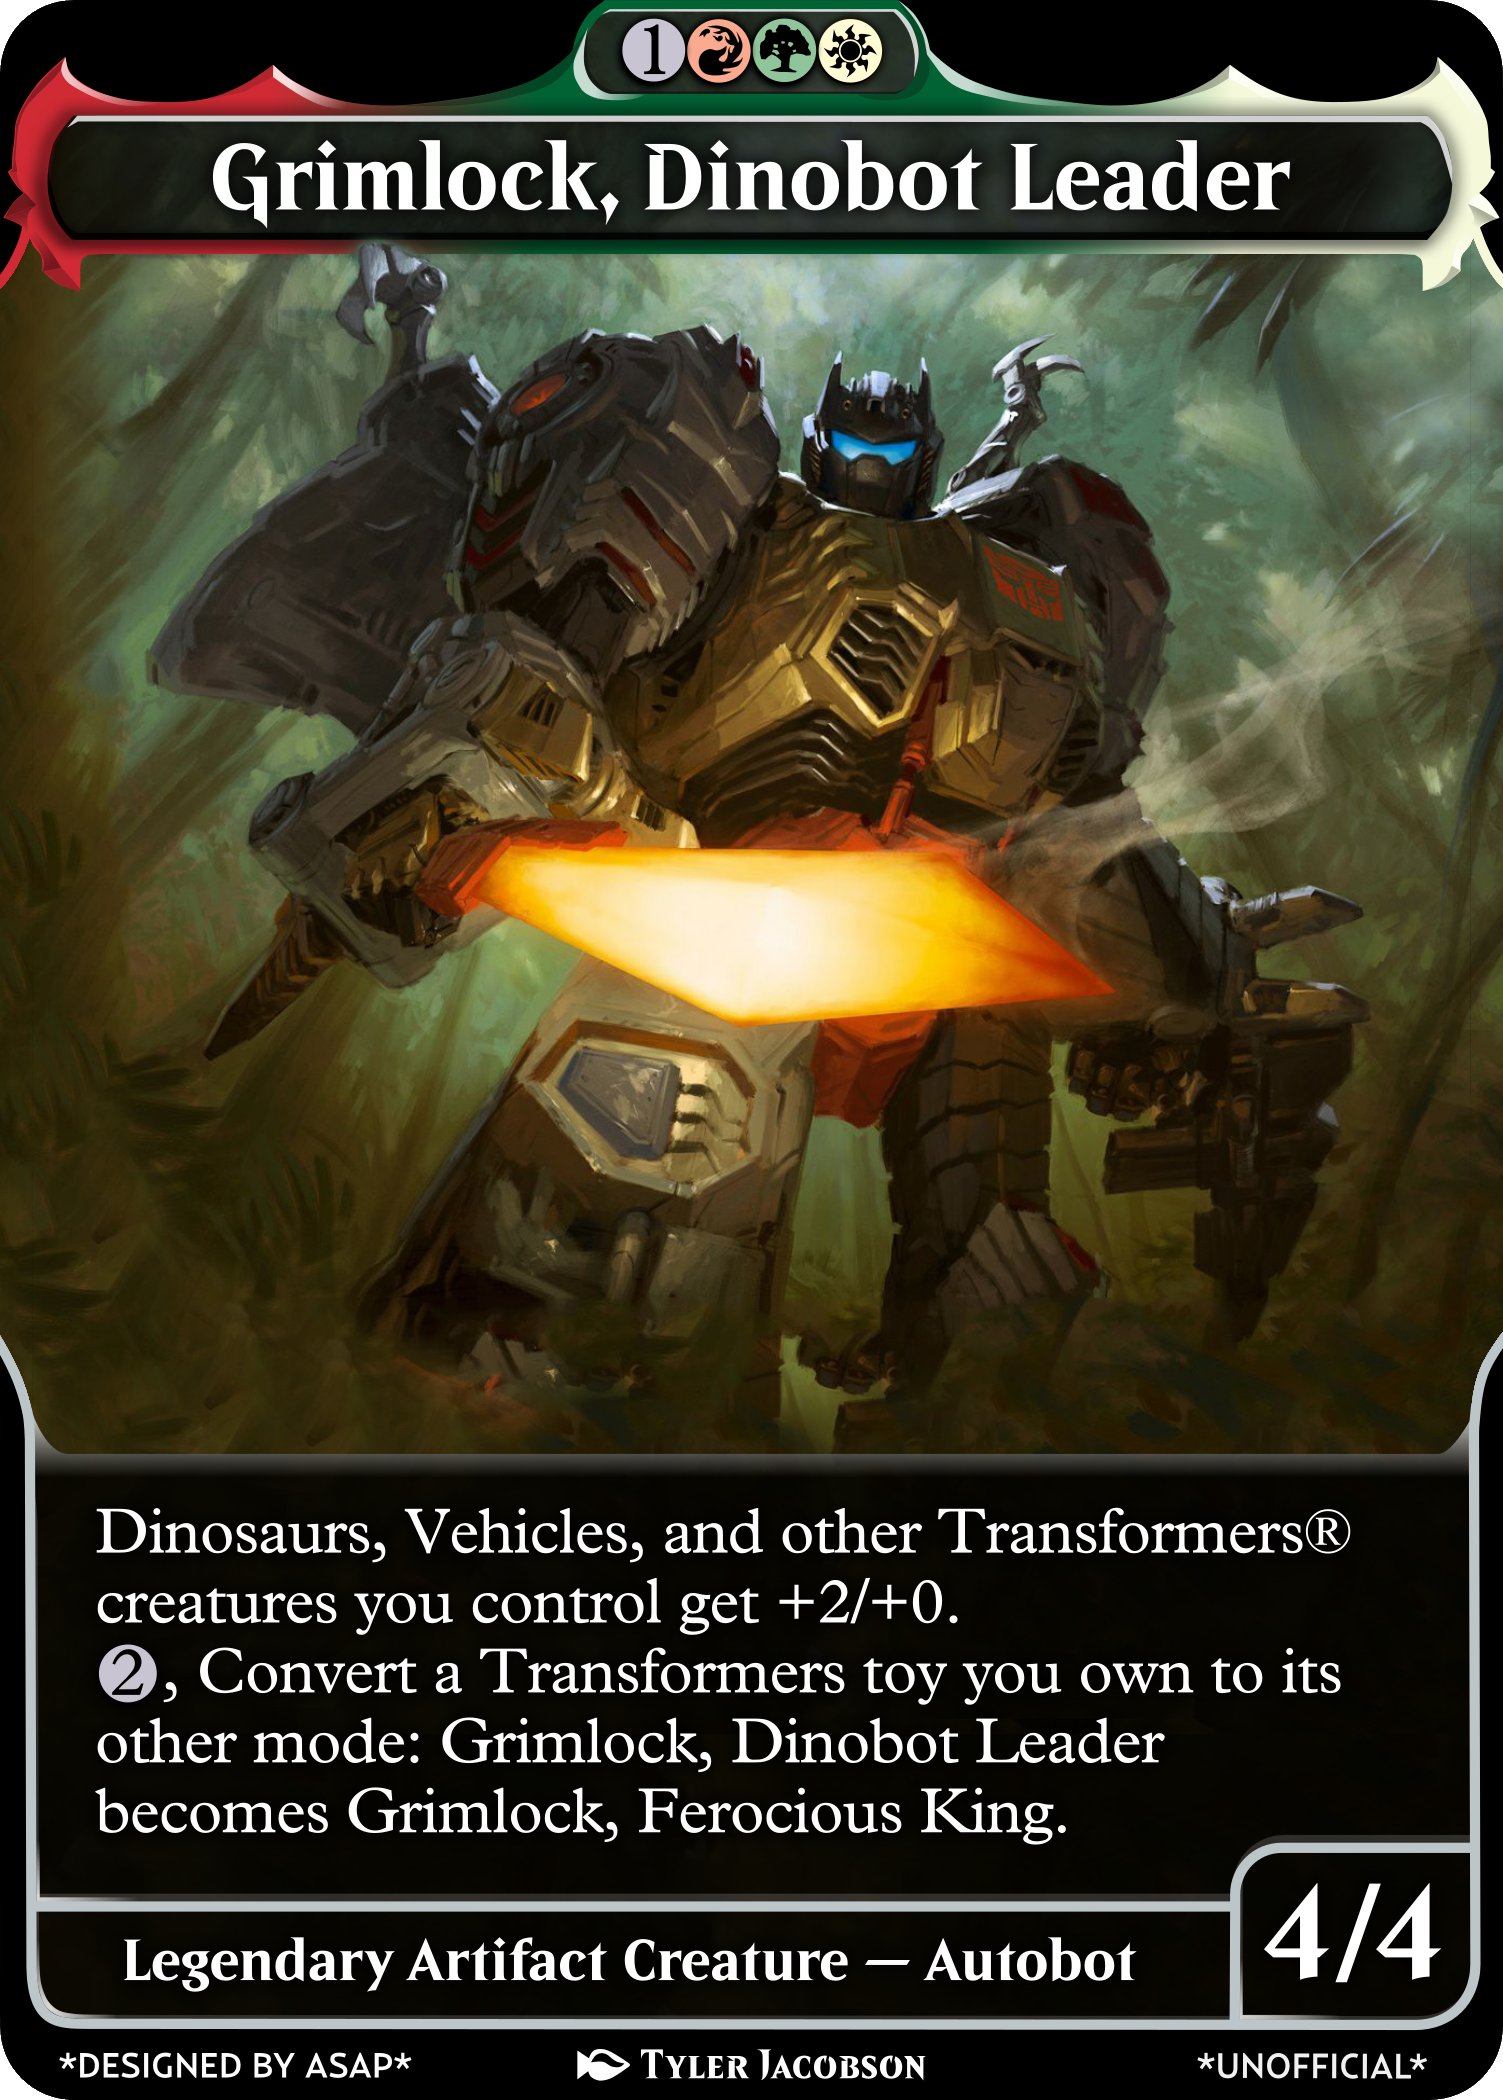 Grimlock, Dinobot Leader by ASAPproxies on DeviantArt